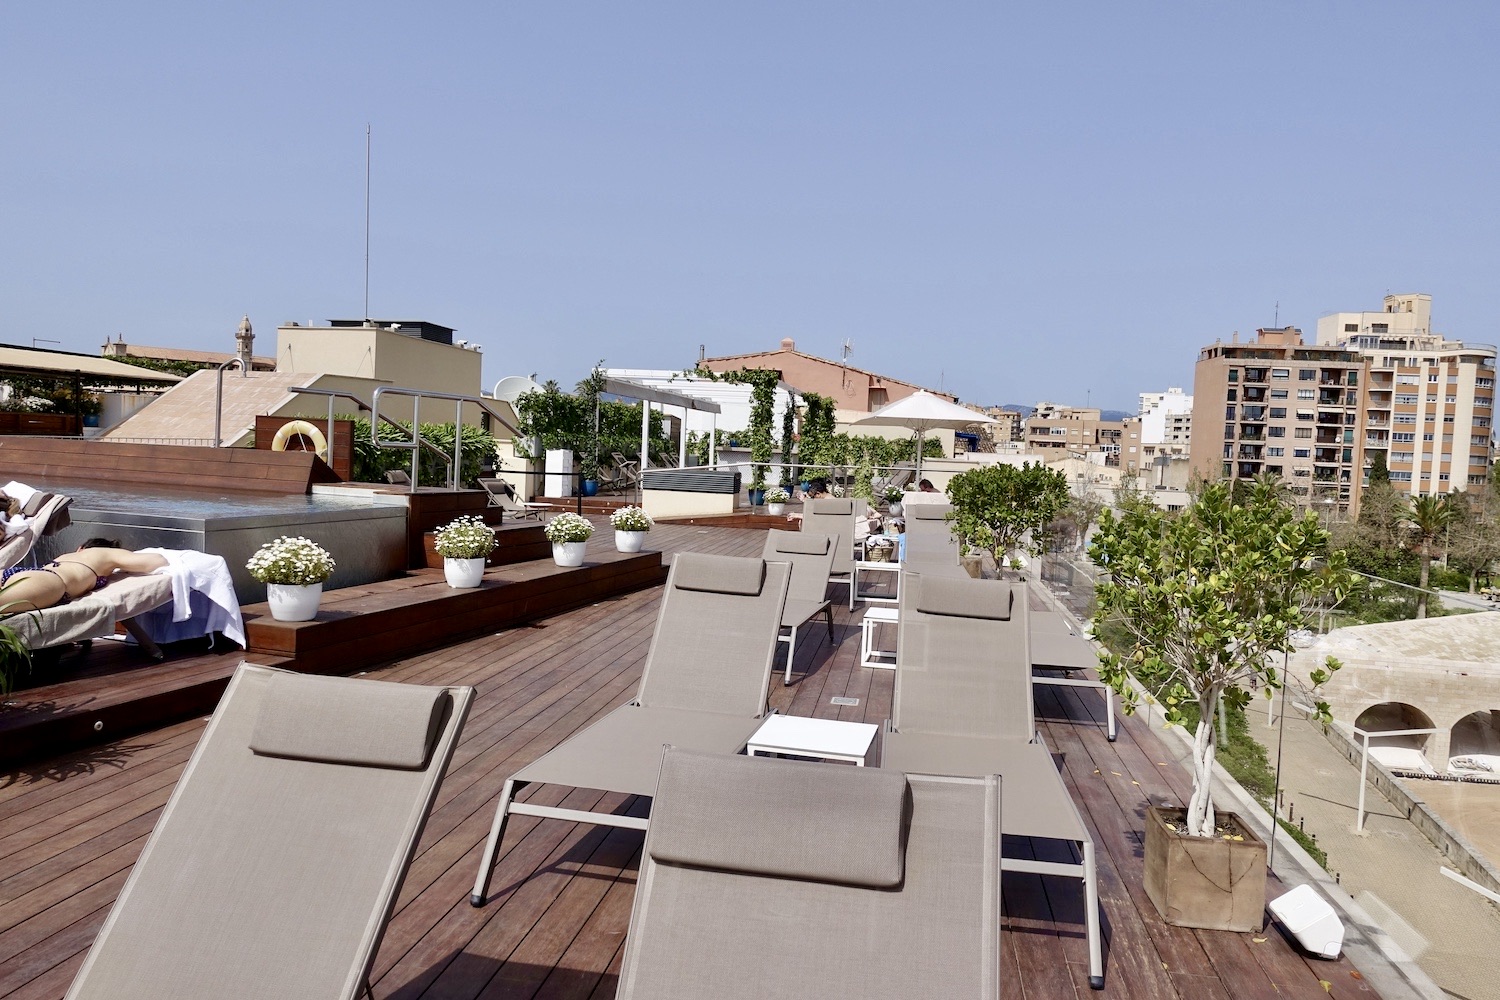 Hotel Es Princep Palma de Mallorca/Spain/staying & dining in style in Palma de Mallorca